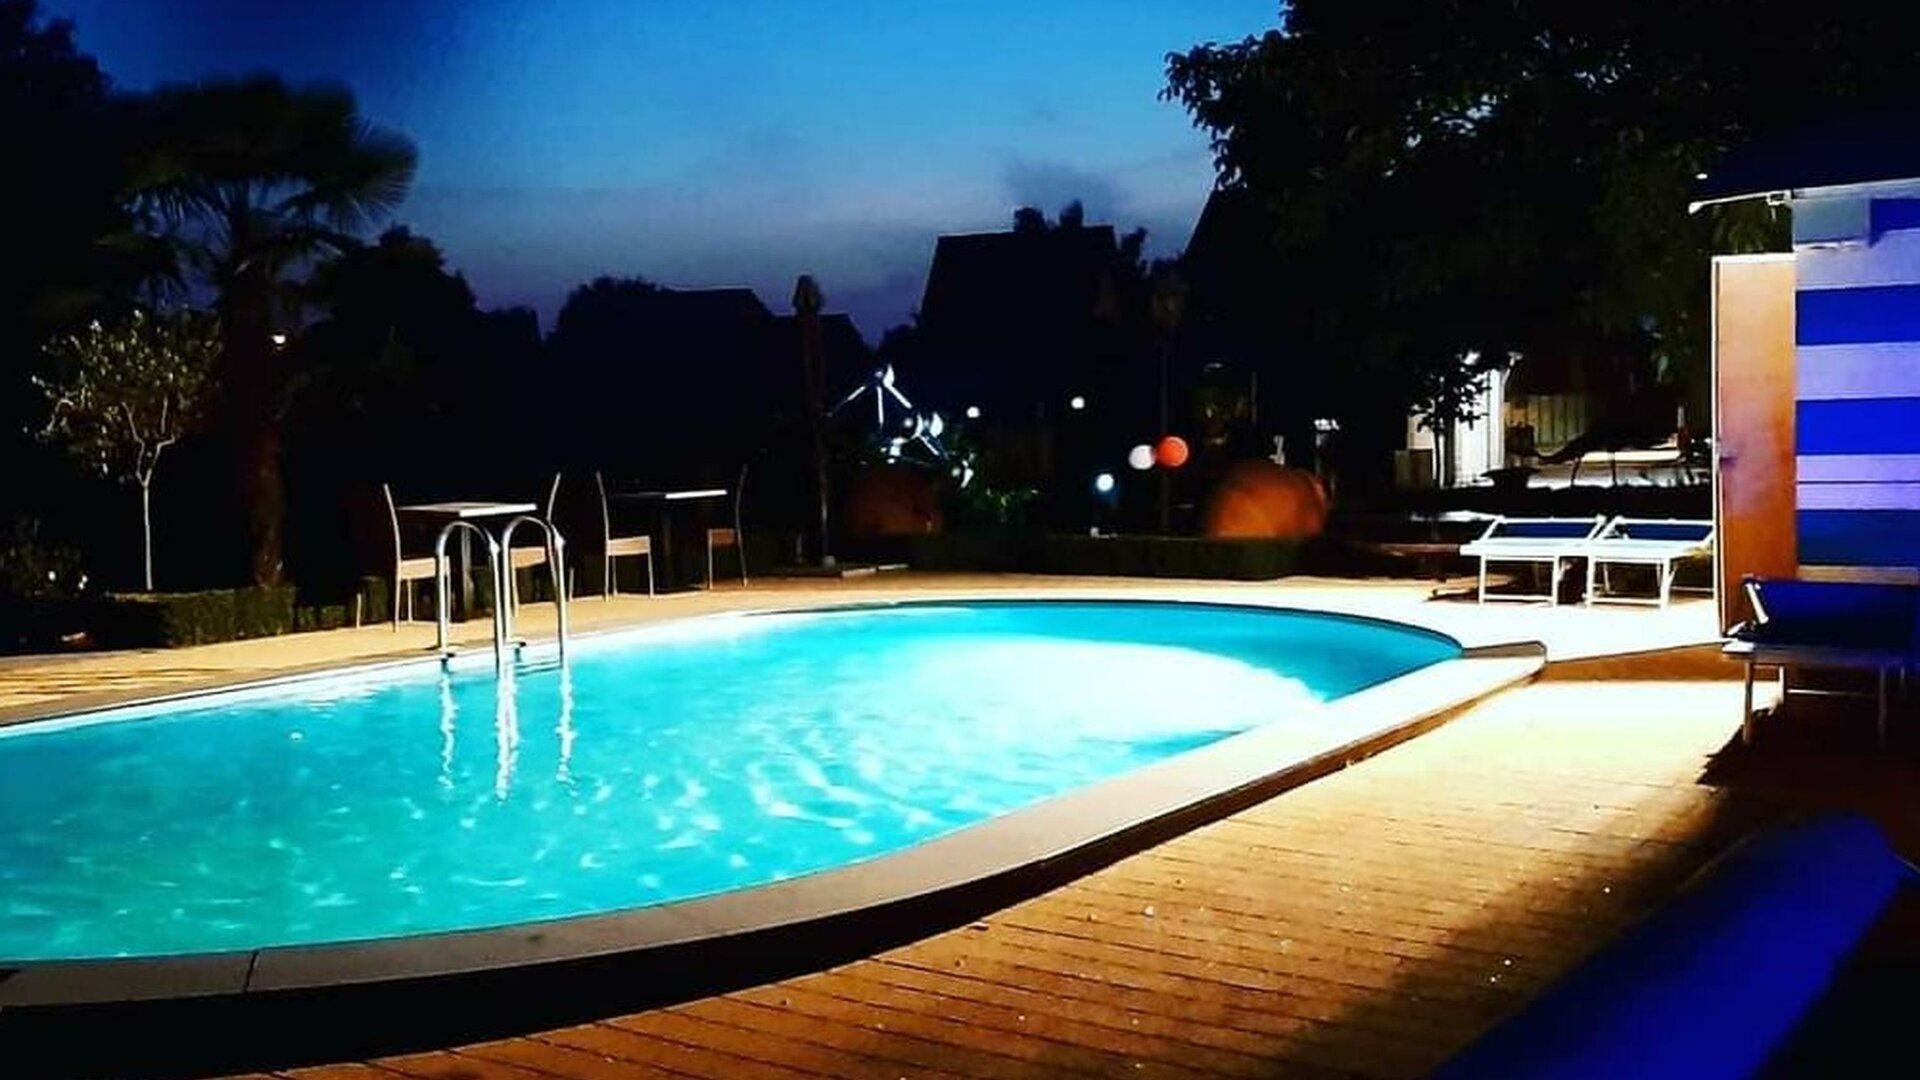 Casa Roman - Swimming pool by night